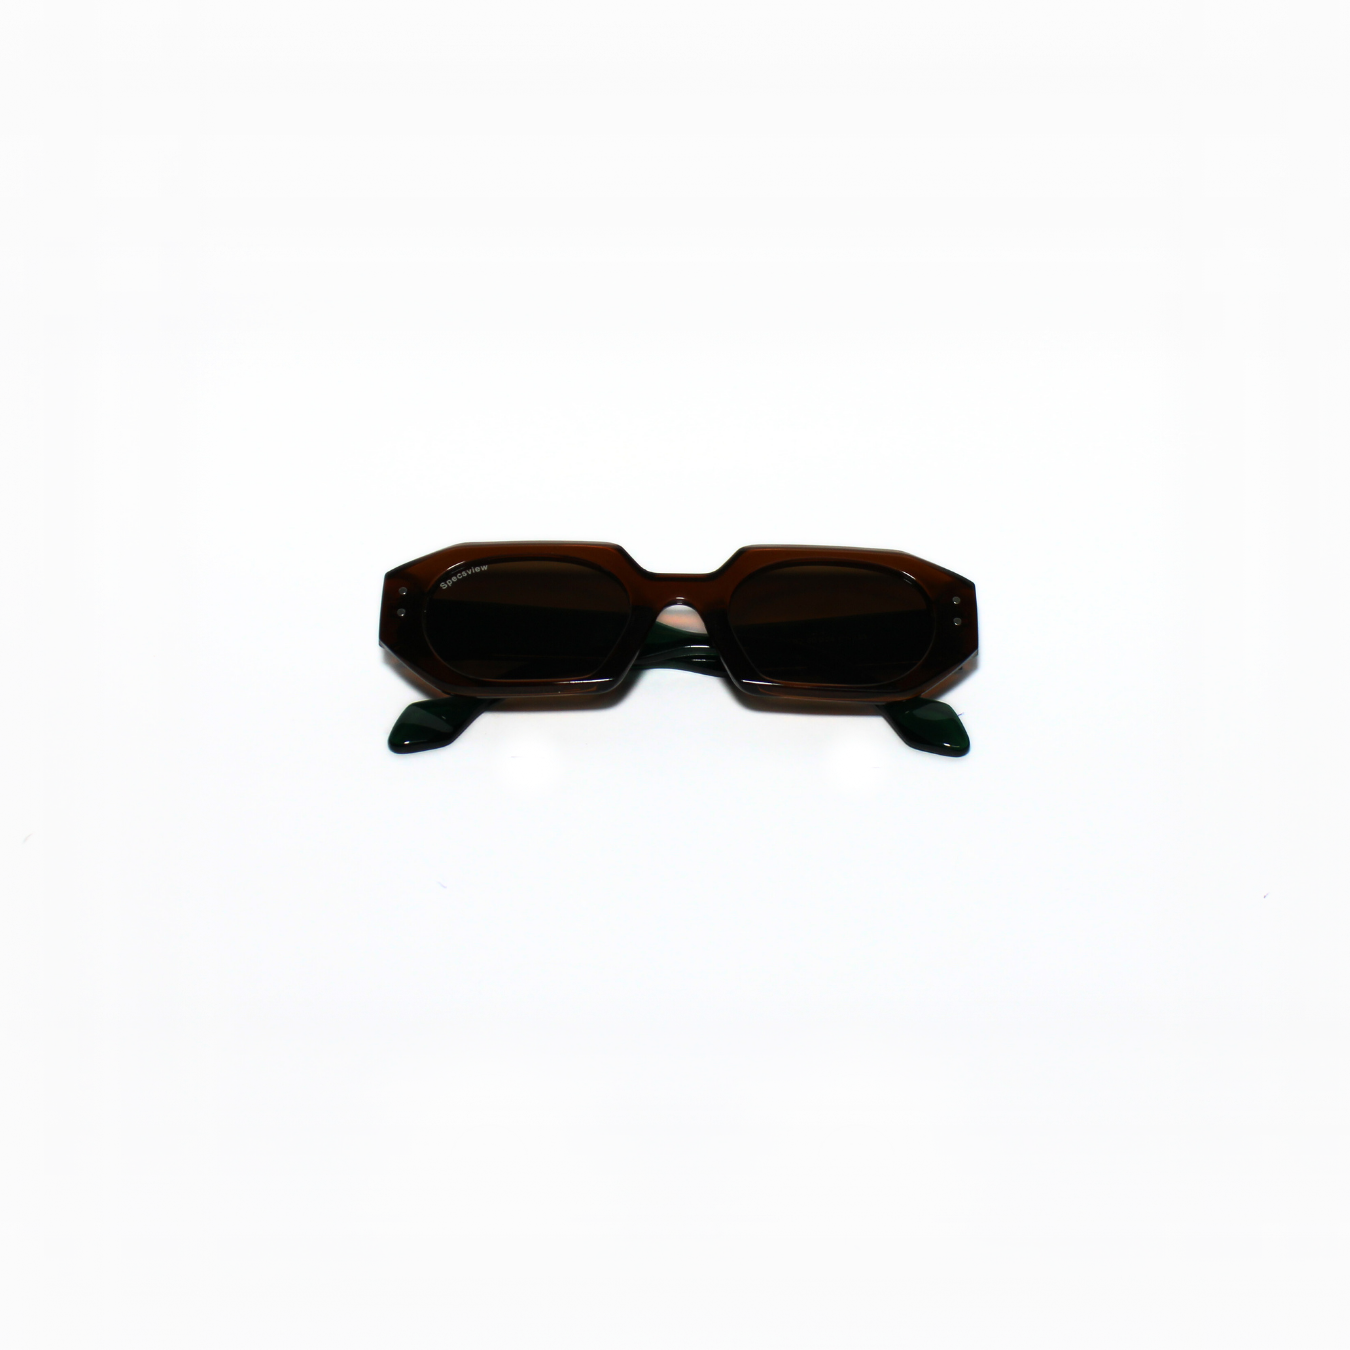 NOAH 003 I Sunglasses for Men and Women - Specsview